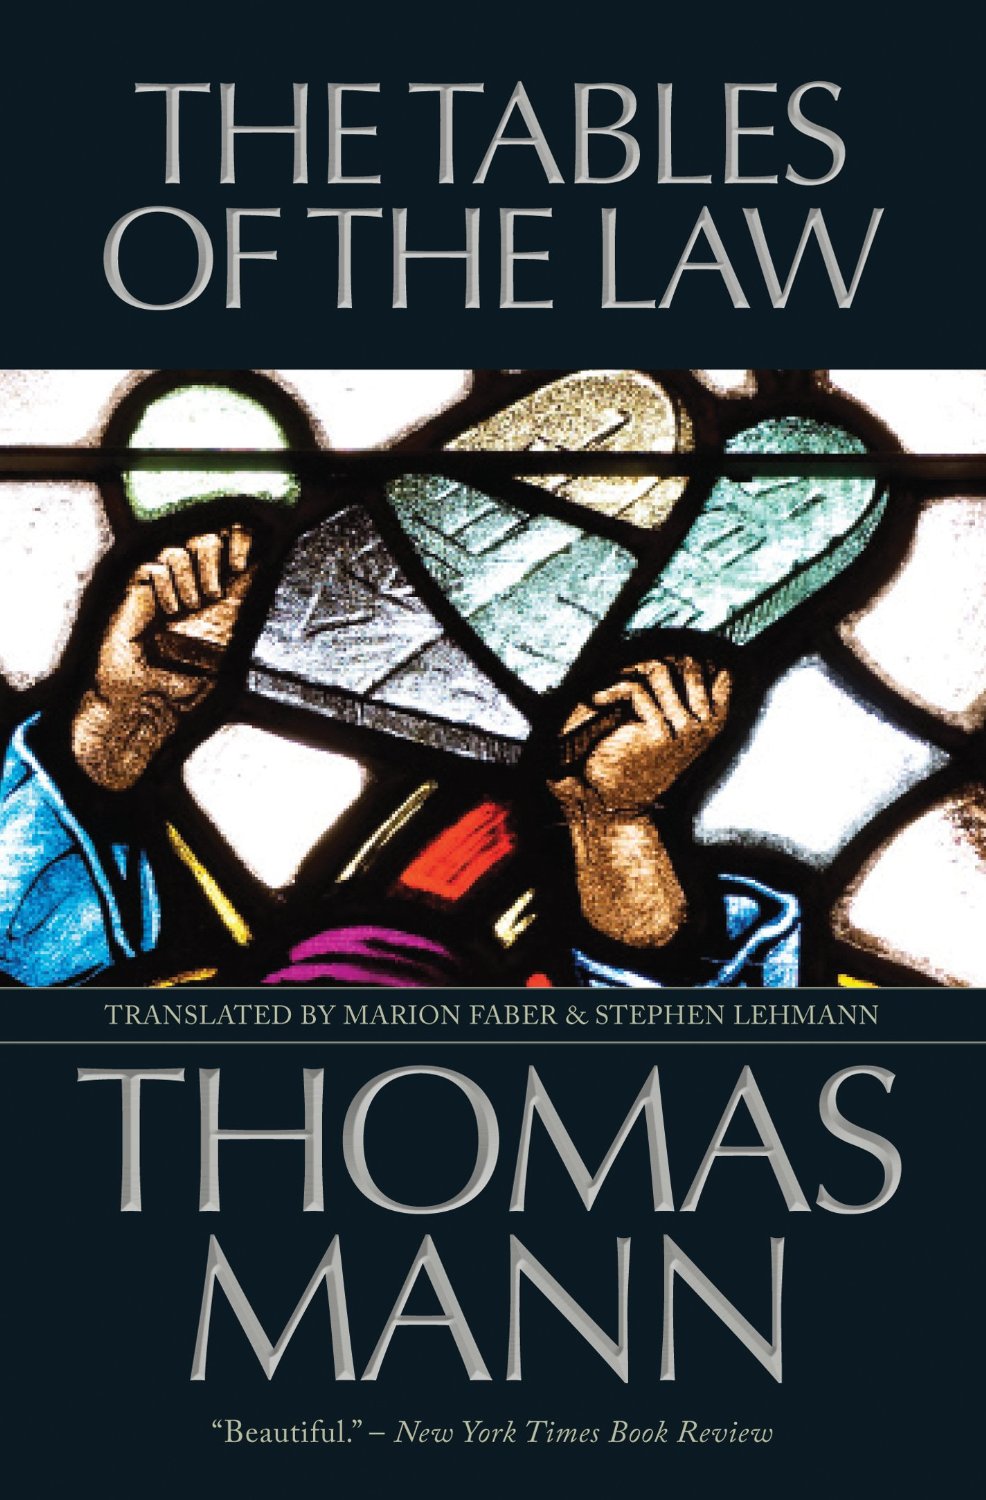 Read ebook : Mann, Thomas - Tables of the Law (Paul Dry, 2010).pdf